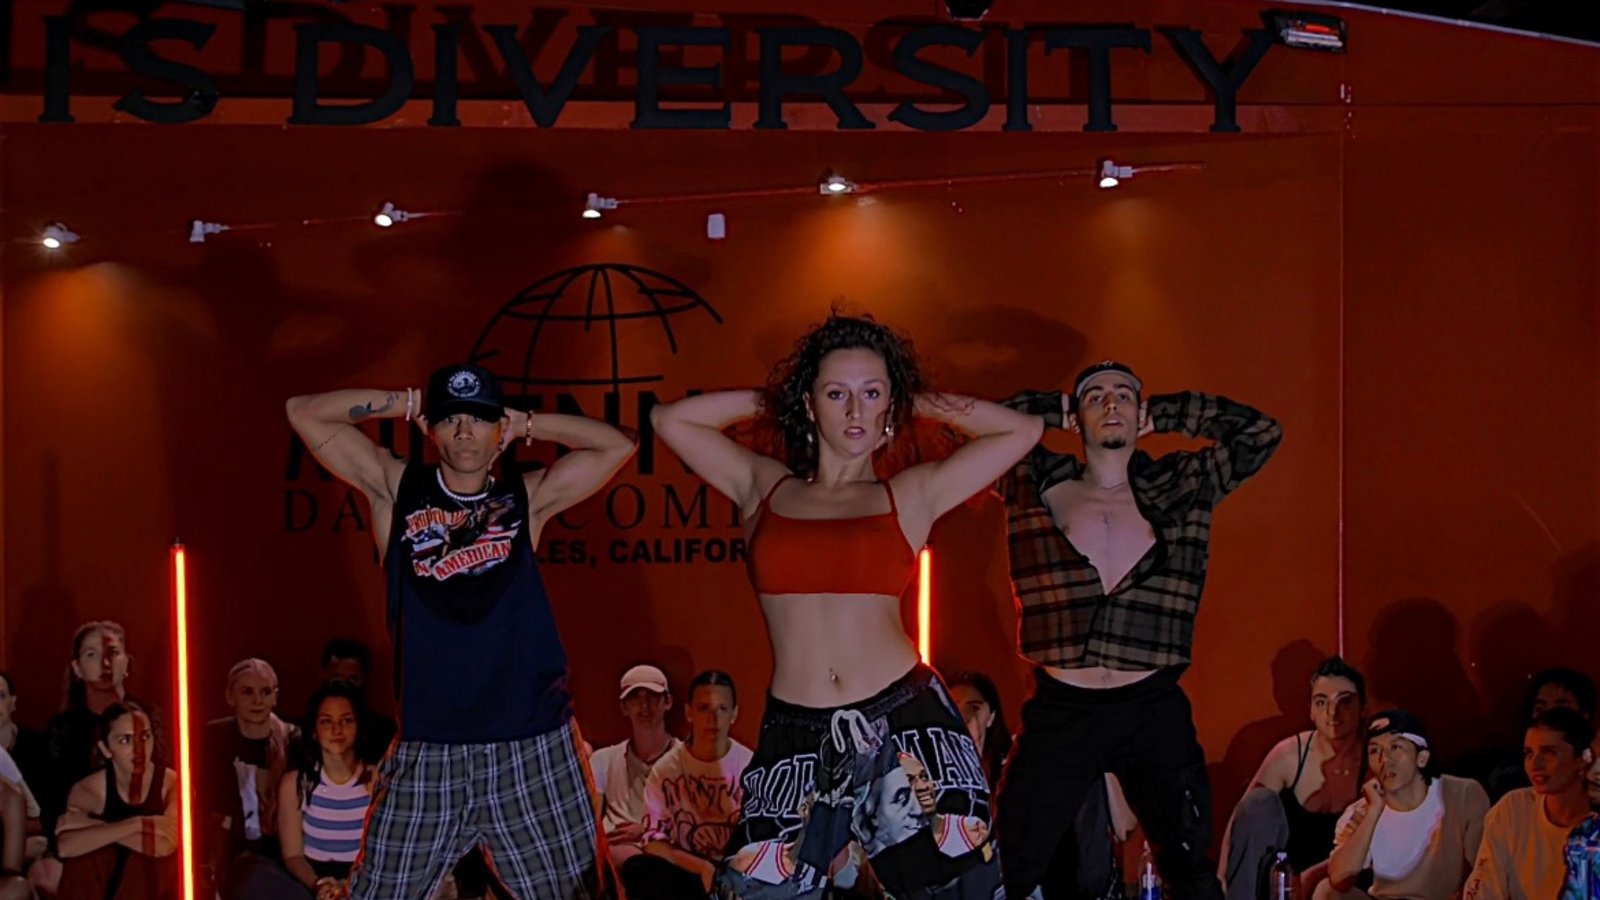 Amelie Kienzle auf Momentaufnahmen aus Videos des Millennium Dance Complex Los Angeles